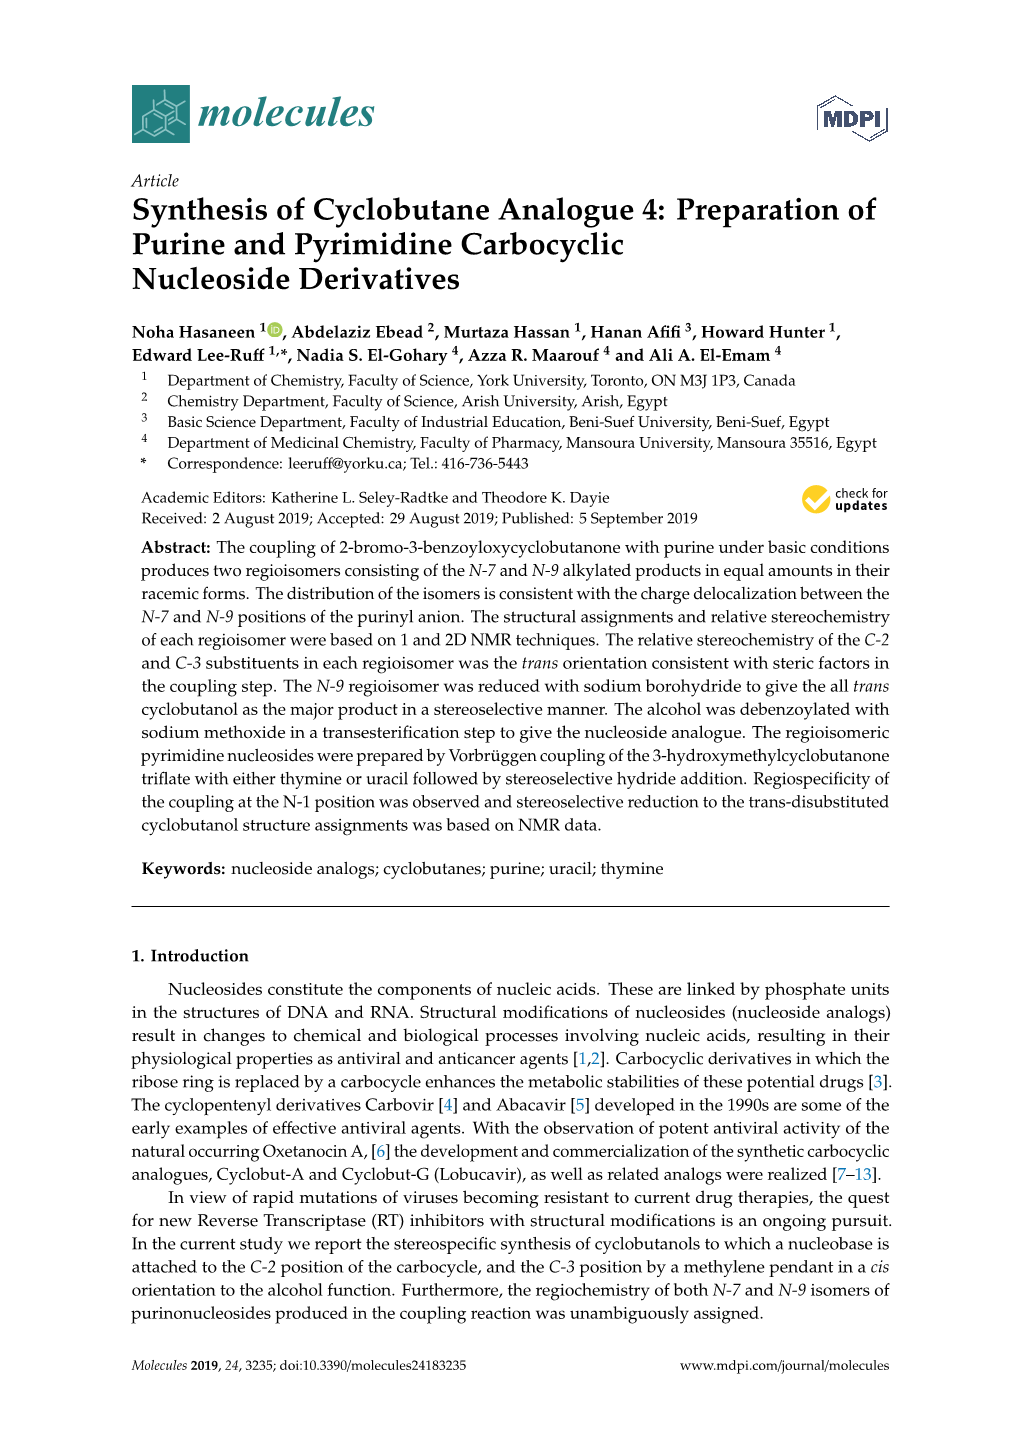 Preparation of Purine and Pyrimidine Carbocyclic Nucleoside Derivatives